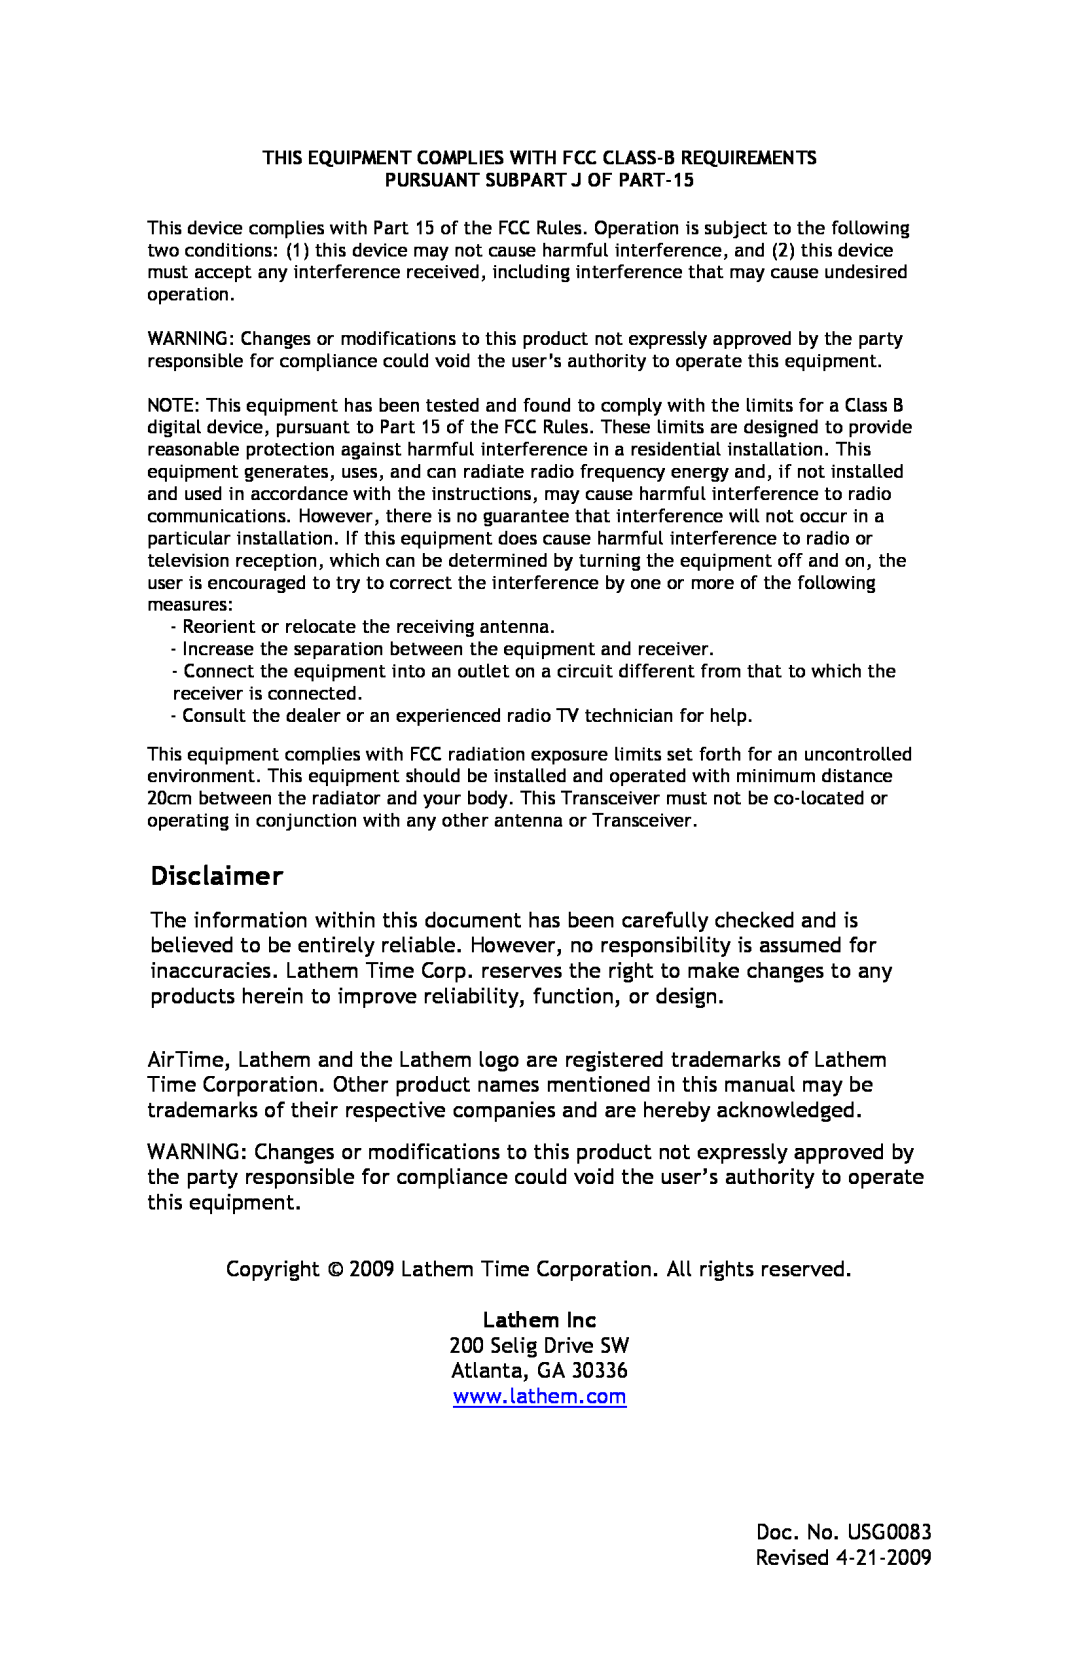 Lathem AT-MSX manual Disclaimer, Copyright 2009 Lathem Time Corporation. All rights reserved, Doc. No. USG0083 Revised 